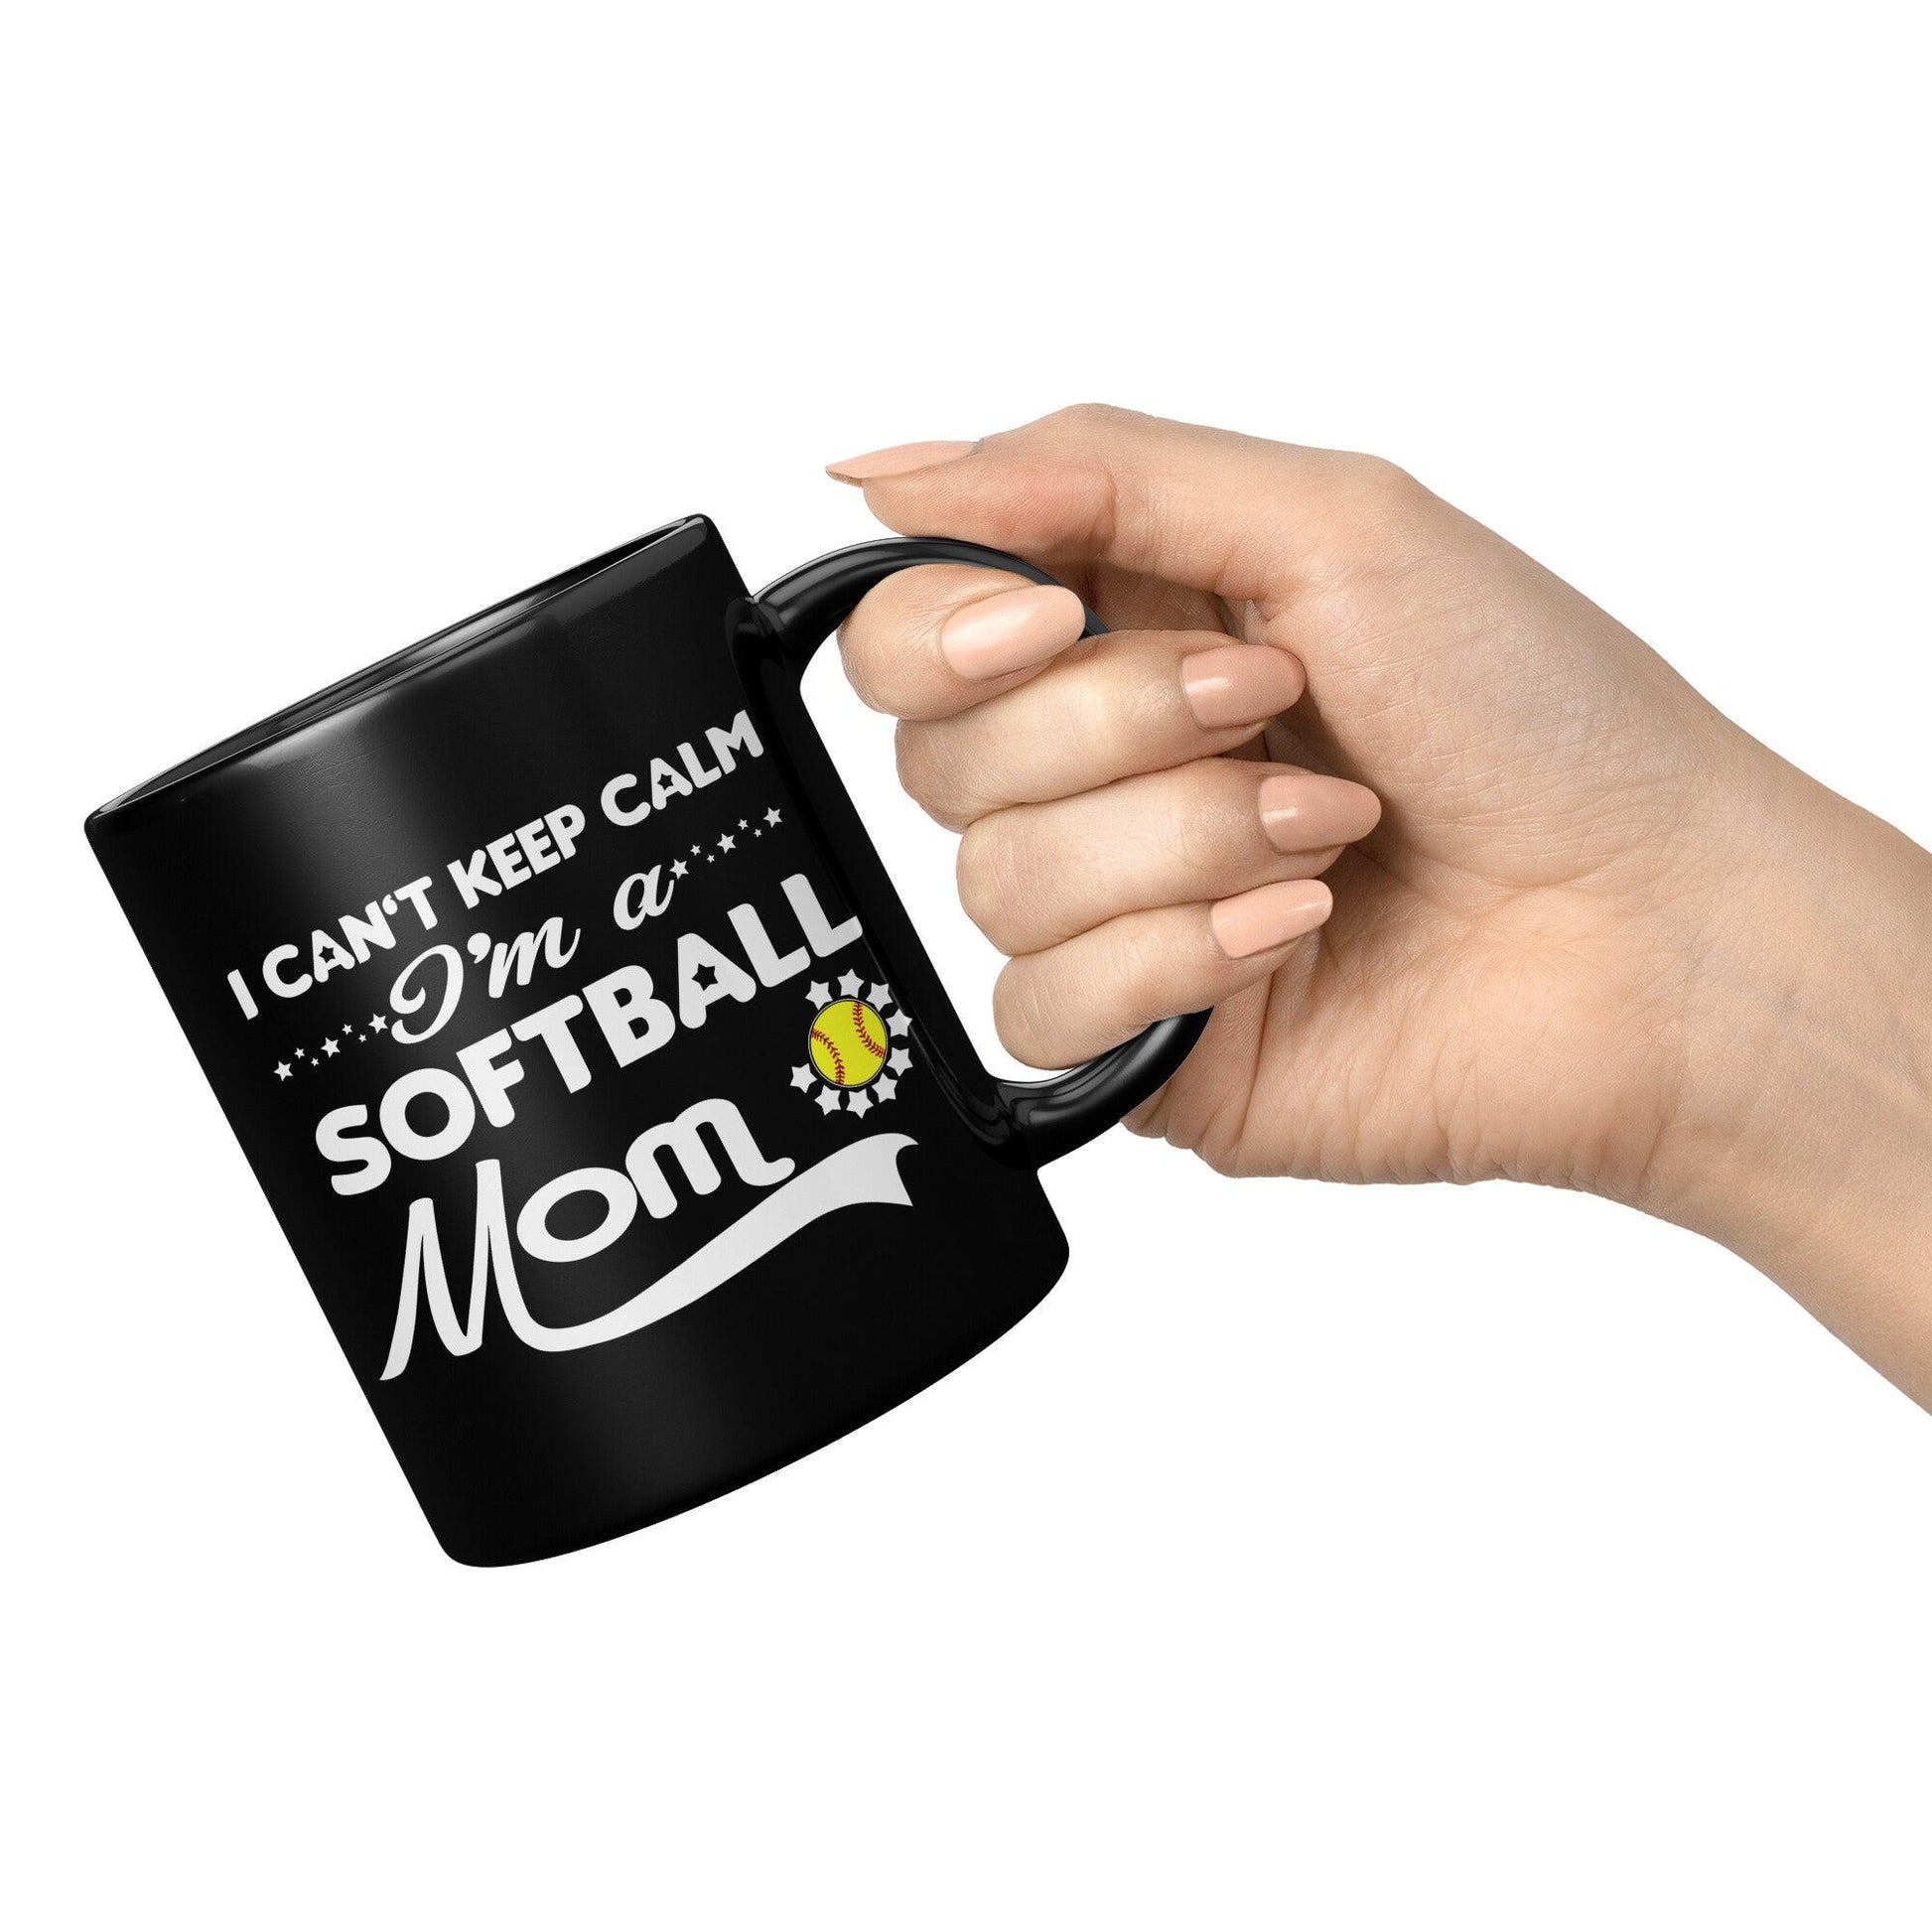 I Can't Keep Calm I'm A Softball Mom Black Mug - TheGivenGet